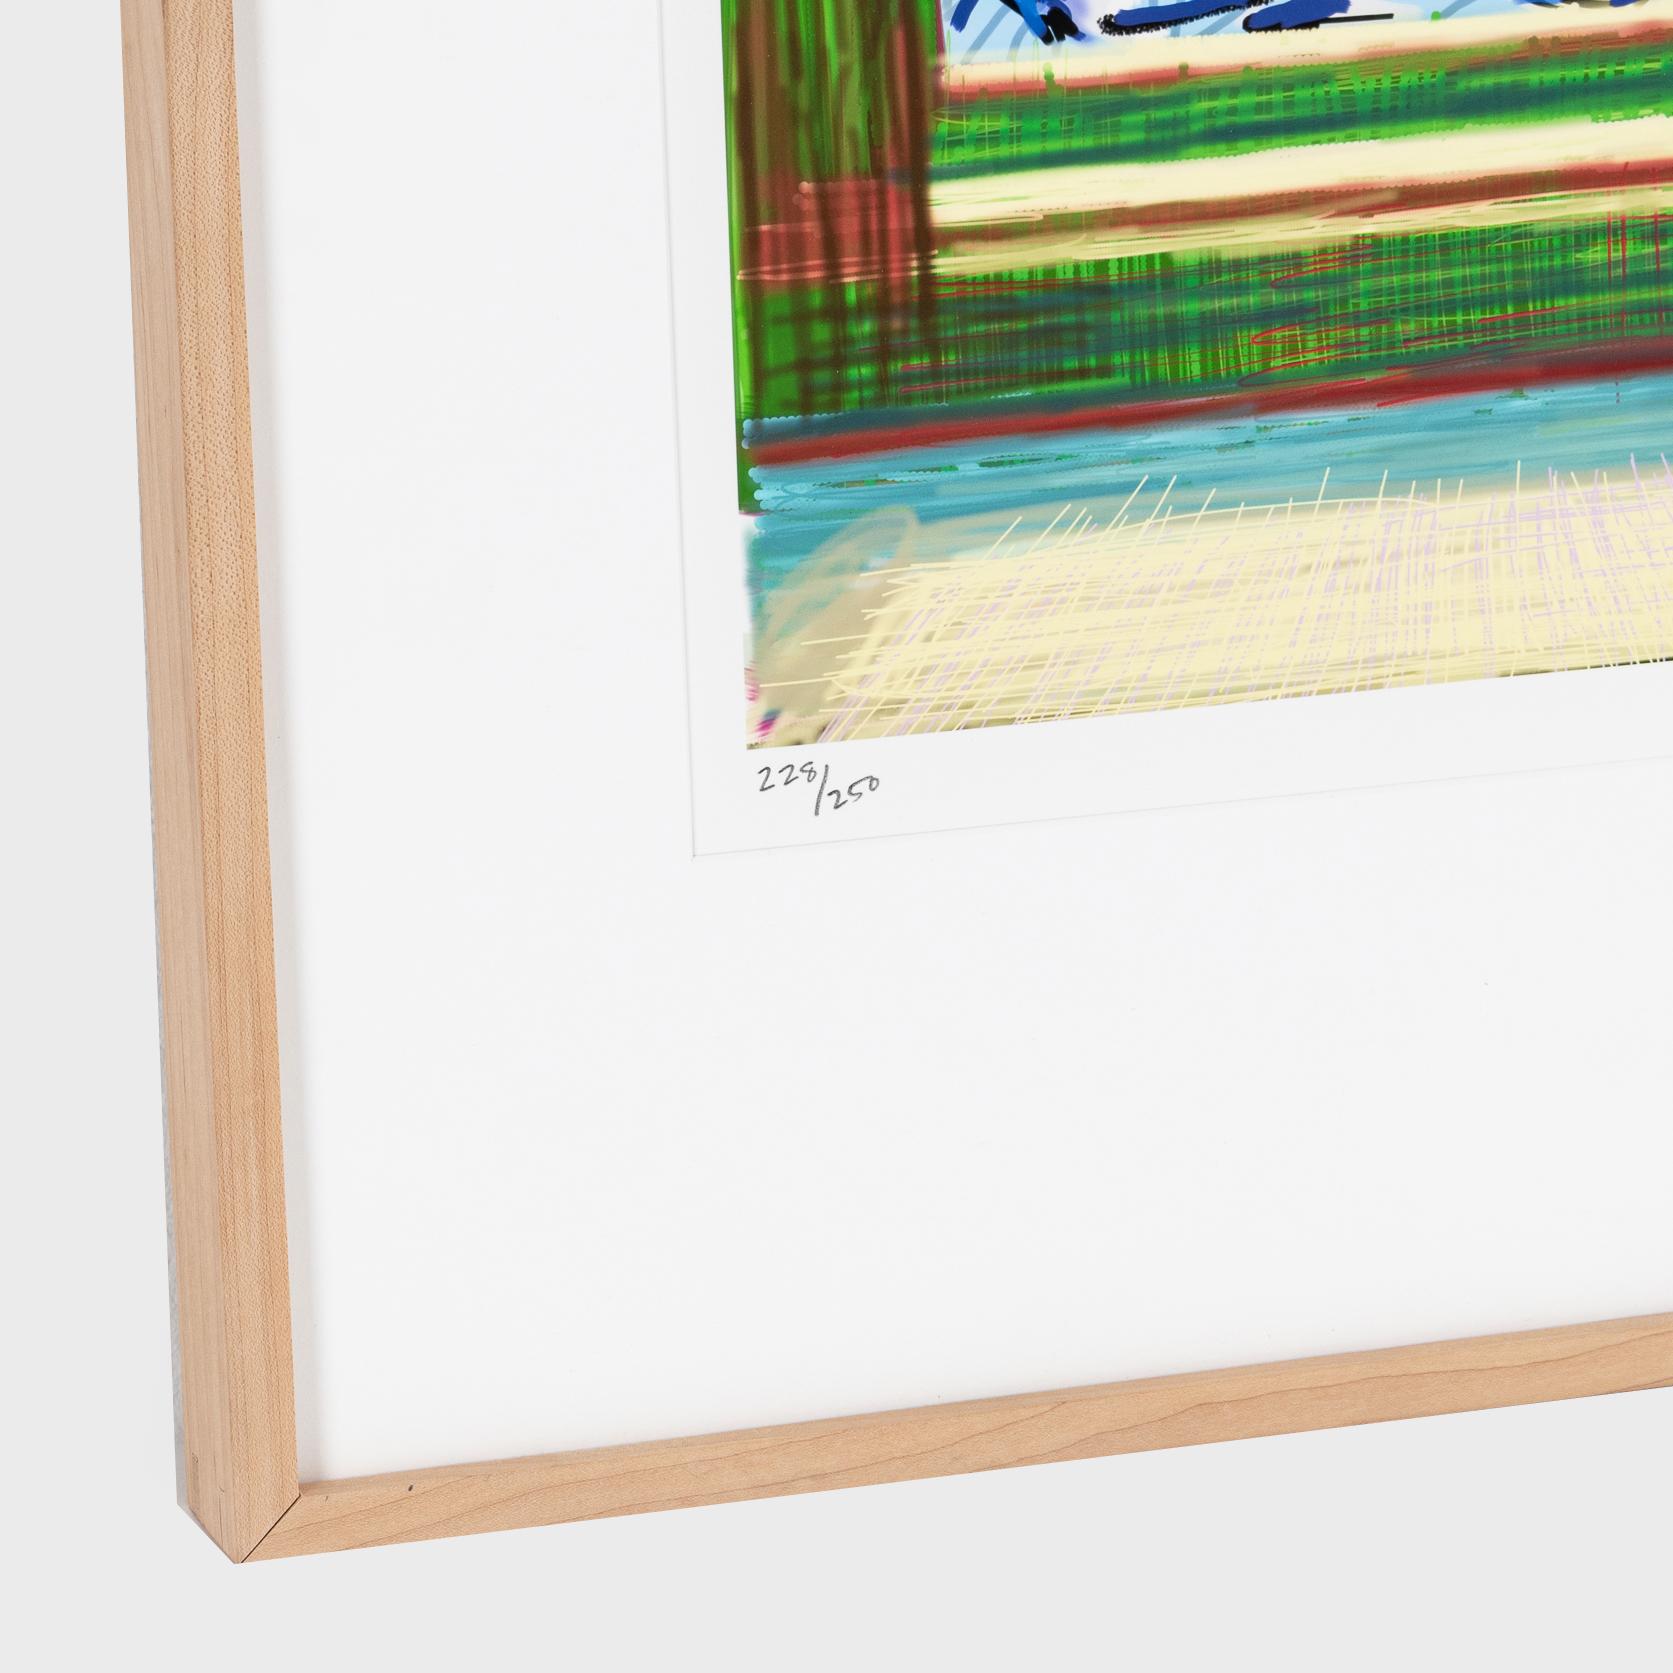 My Window. Art Edition (No. 501–750), iPad drawing ‘No. 610', 23rd December 2010 - Print by David Hockney